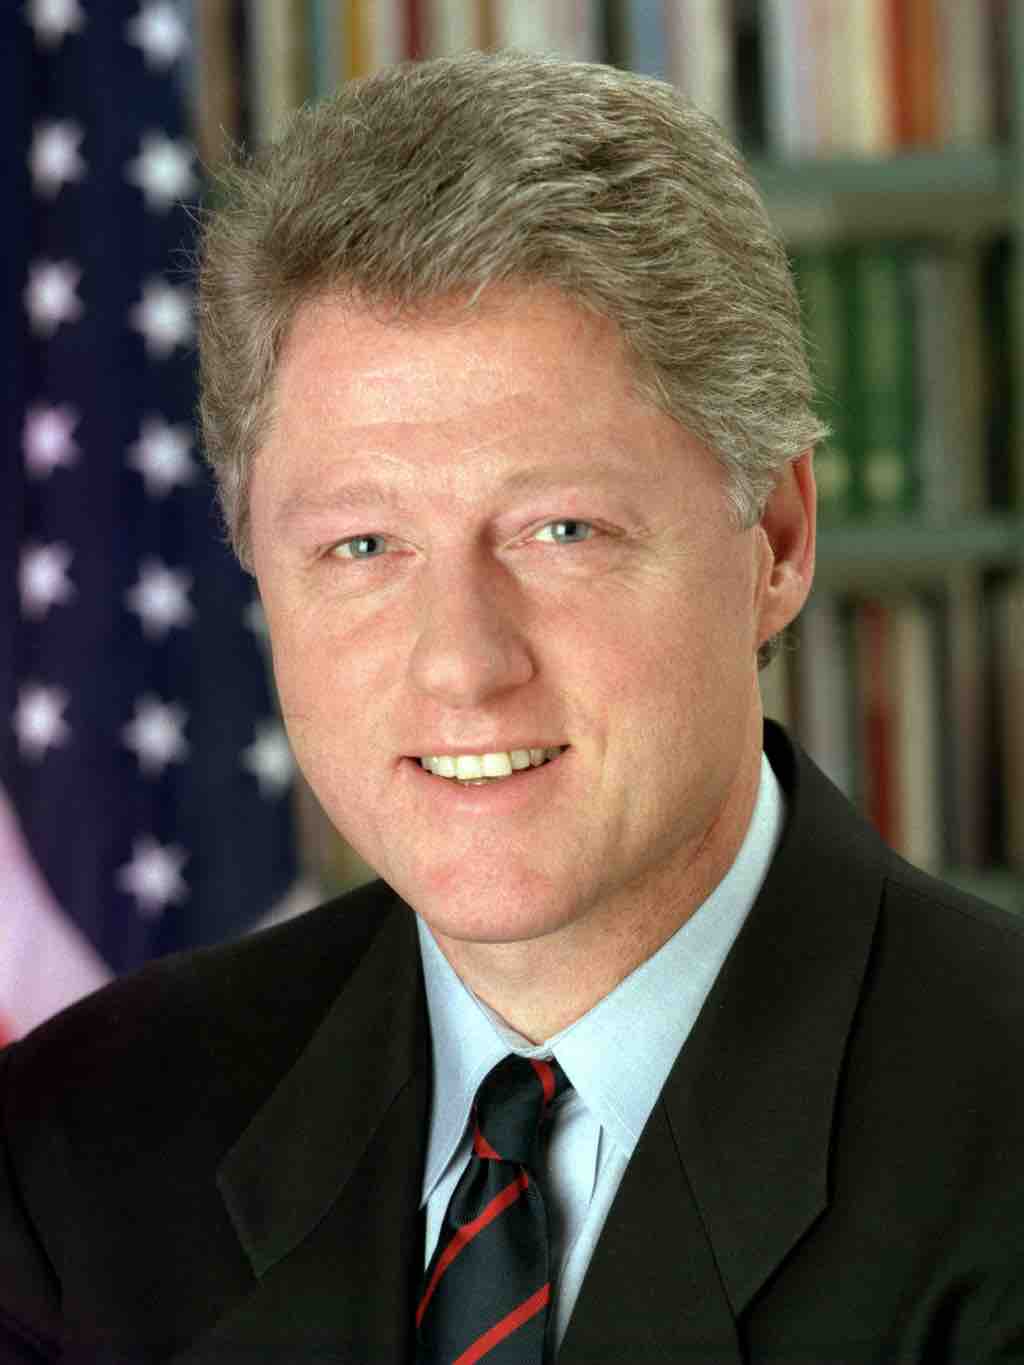 William Jefferson Clinton, America's 42nd President